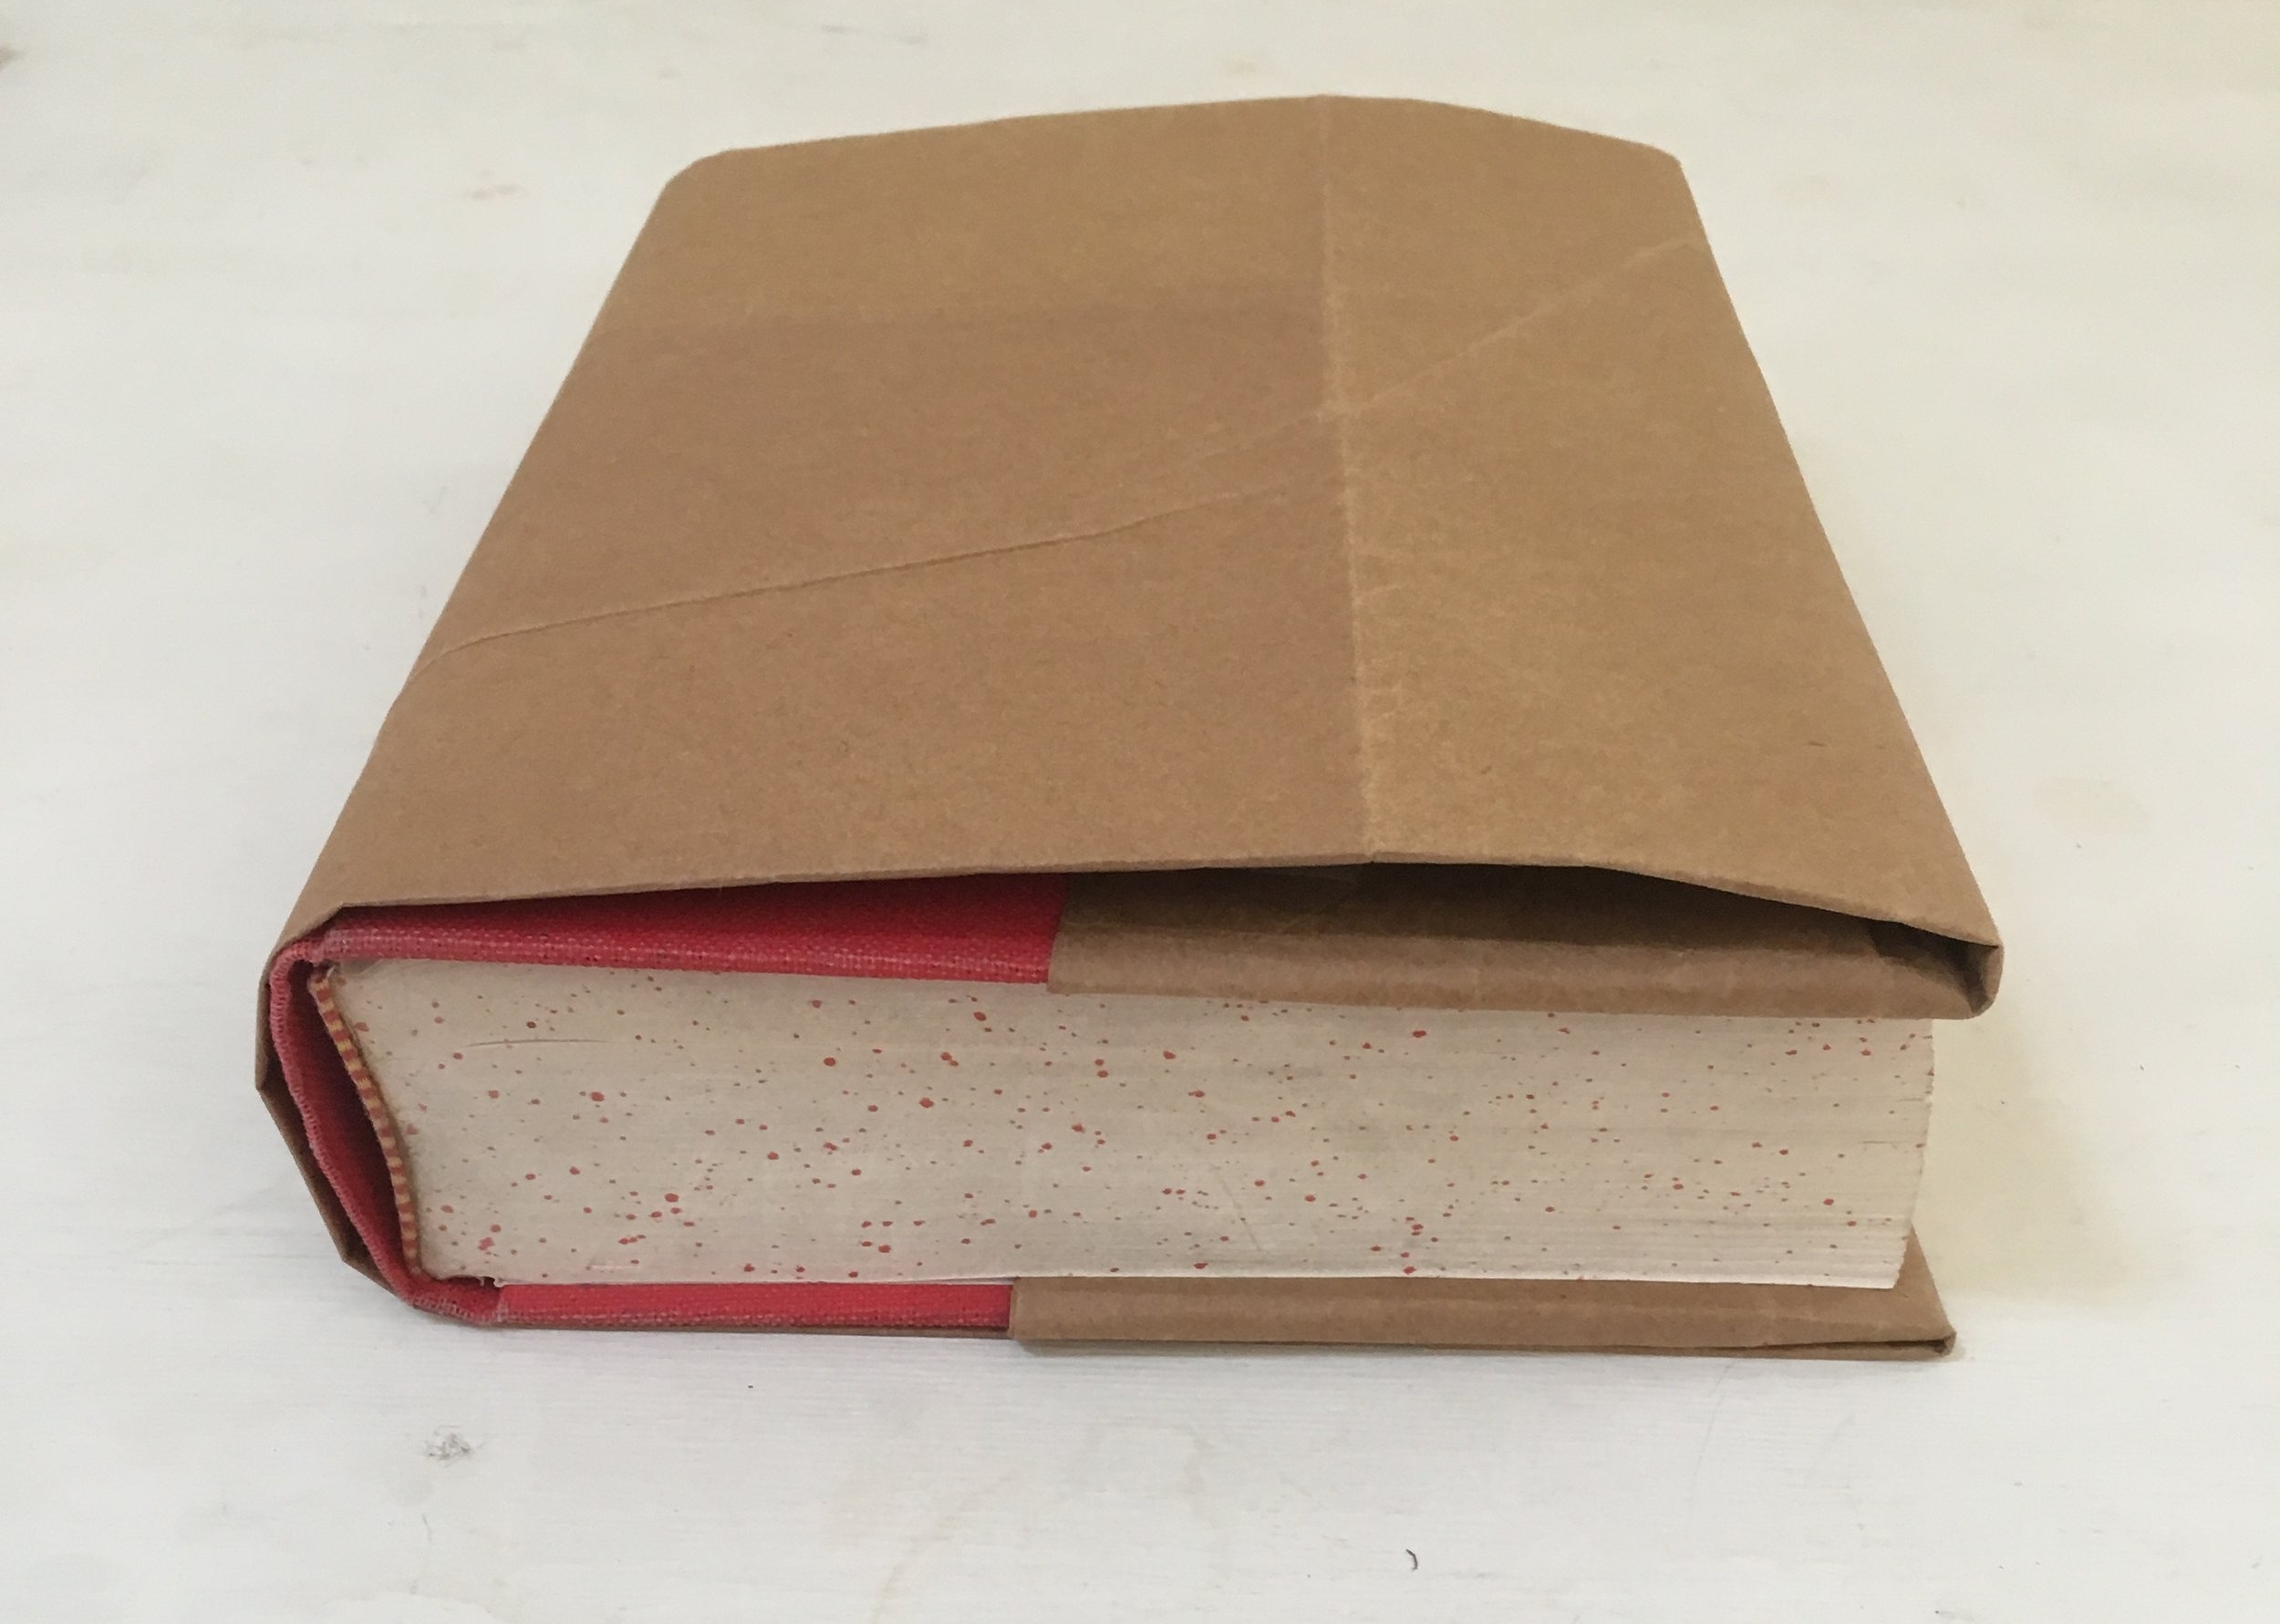 reddit 90s skills - book cover with paper bag